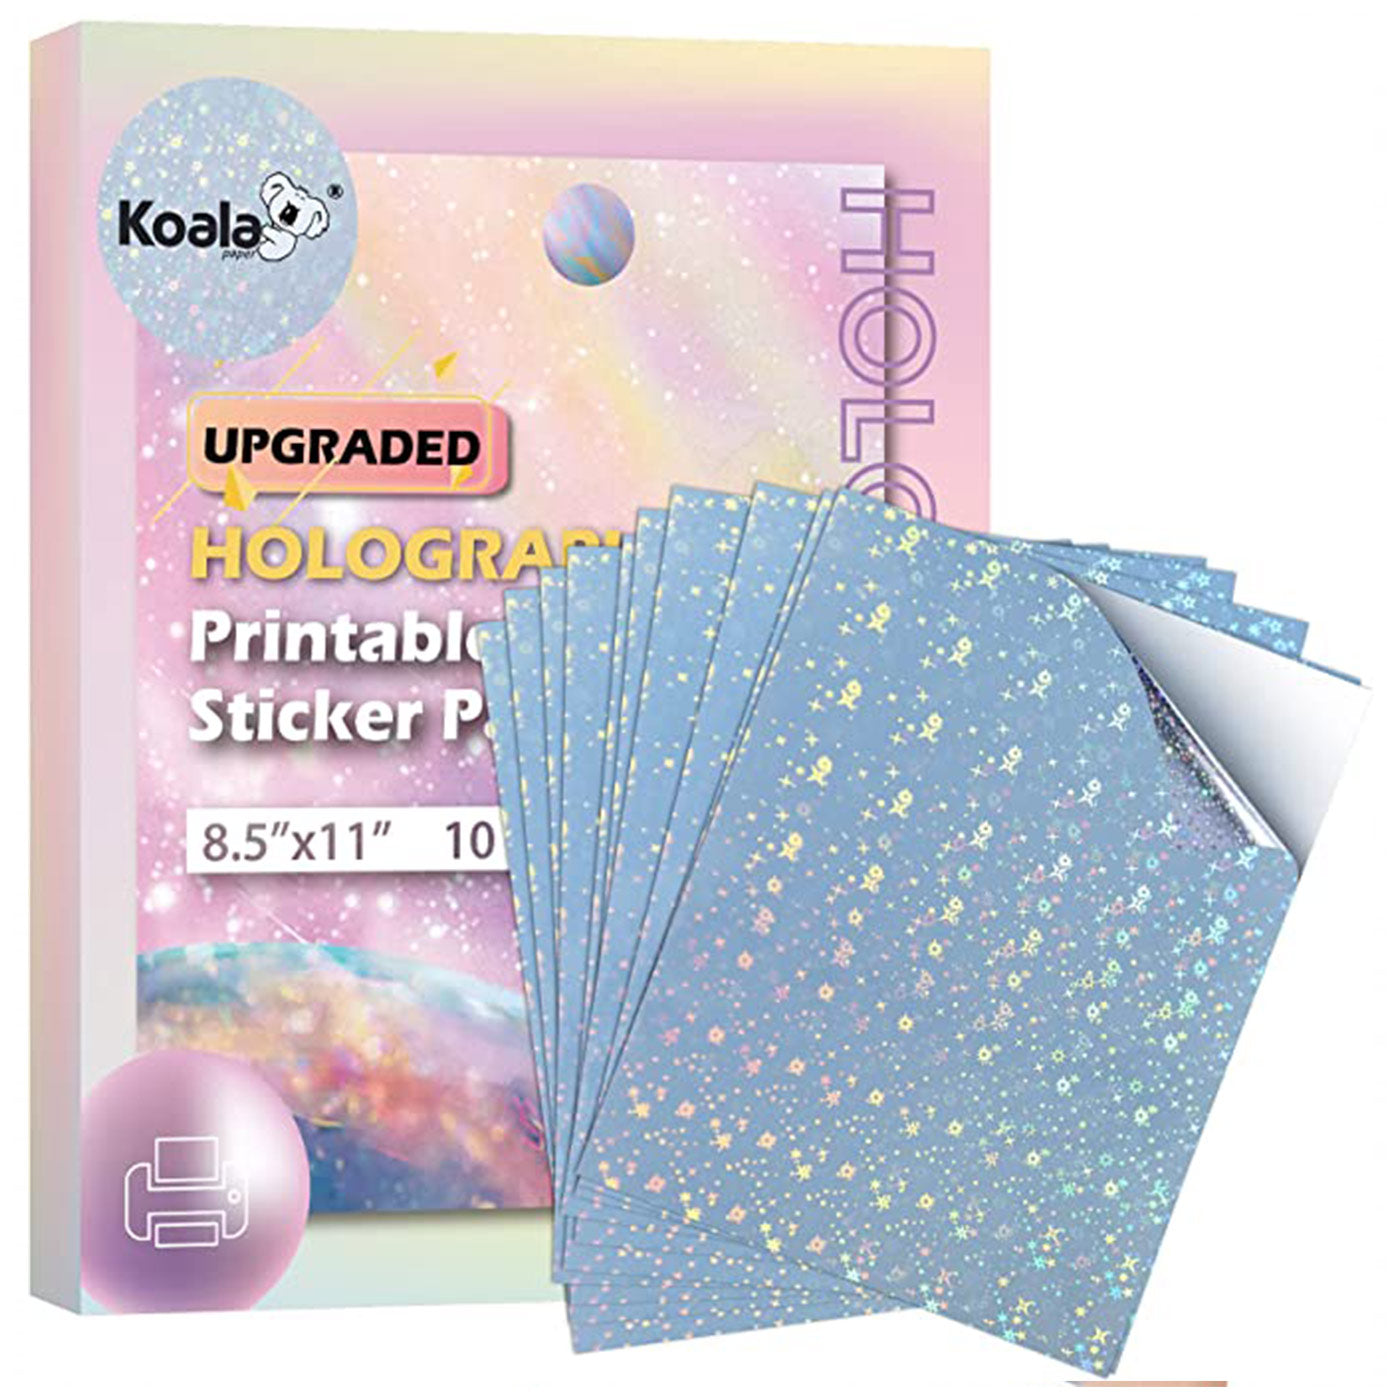  Koala Matte Sticker Paper and Water-resistant Matte Vinyl  Sticker Paper for Inkjet Printers : Office Products